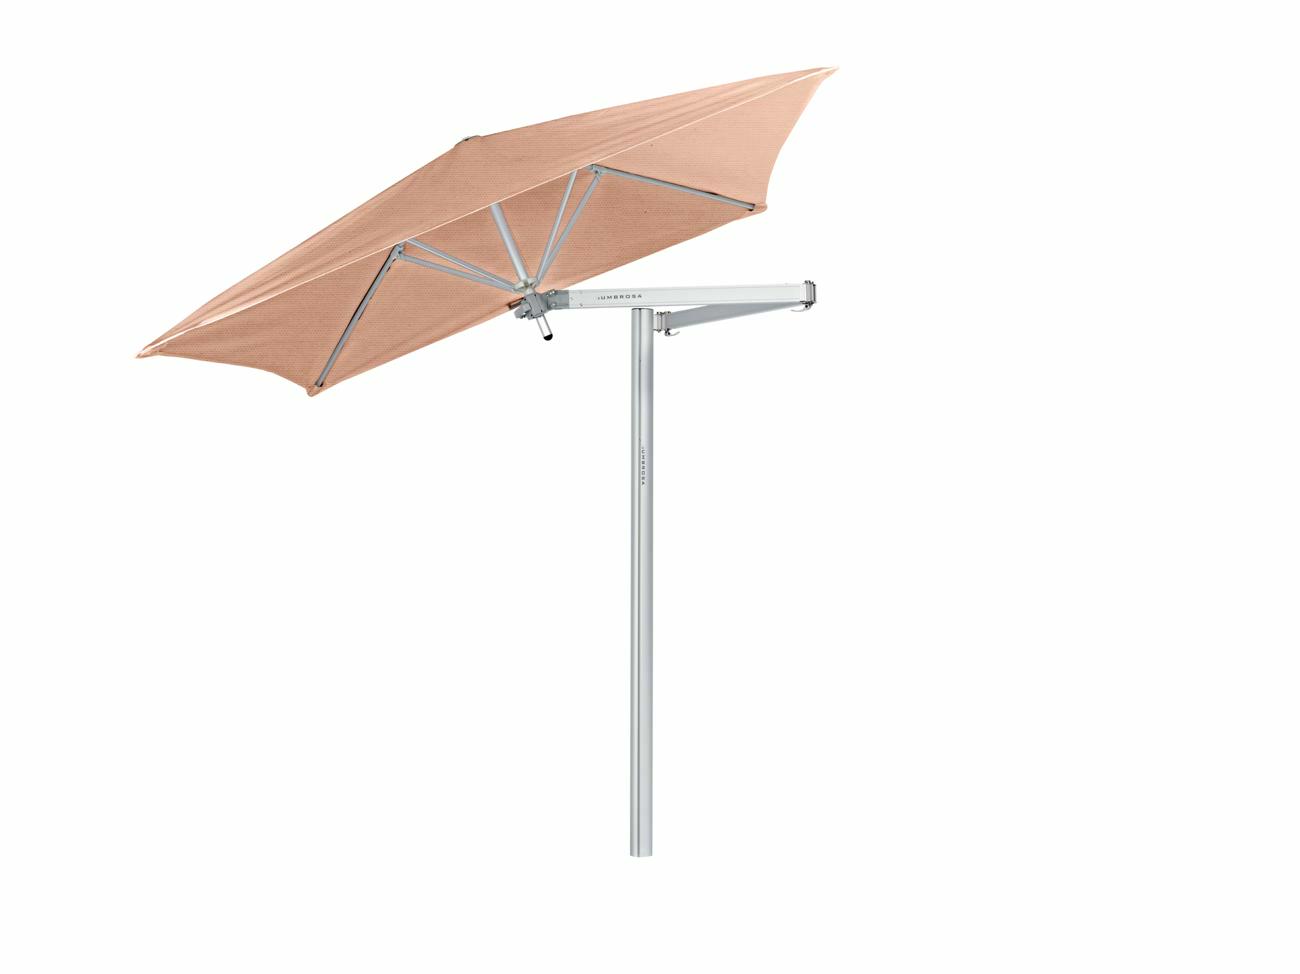 Paraflex cantilever umbrella square 1,9 m with Blush fabric and a Neo arm